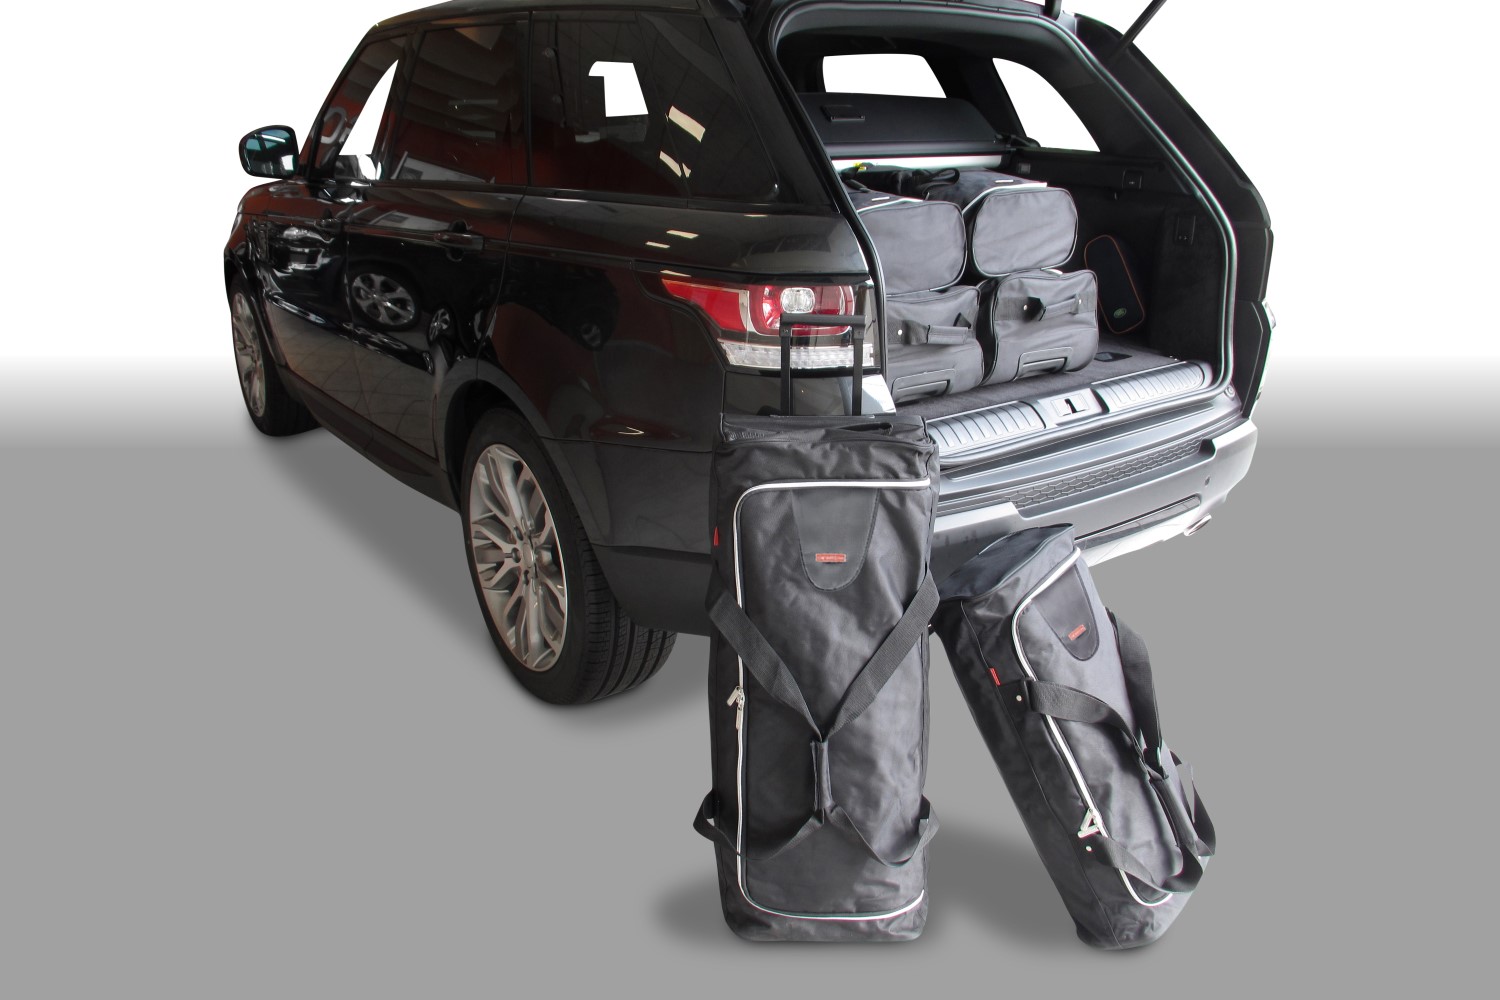 https://www.car-bags.com/images/stories/virtuemart/product/l10501s-range-rover-sport-14-car-bags-1.jpg